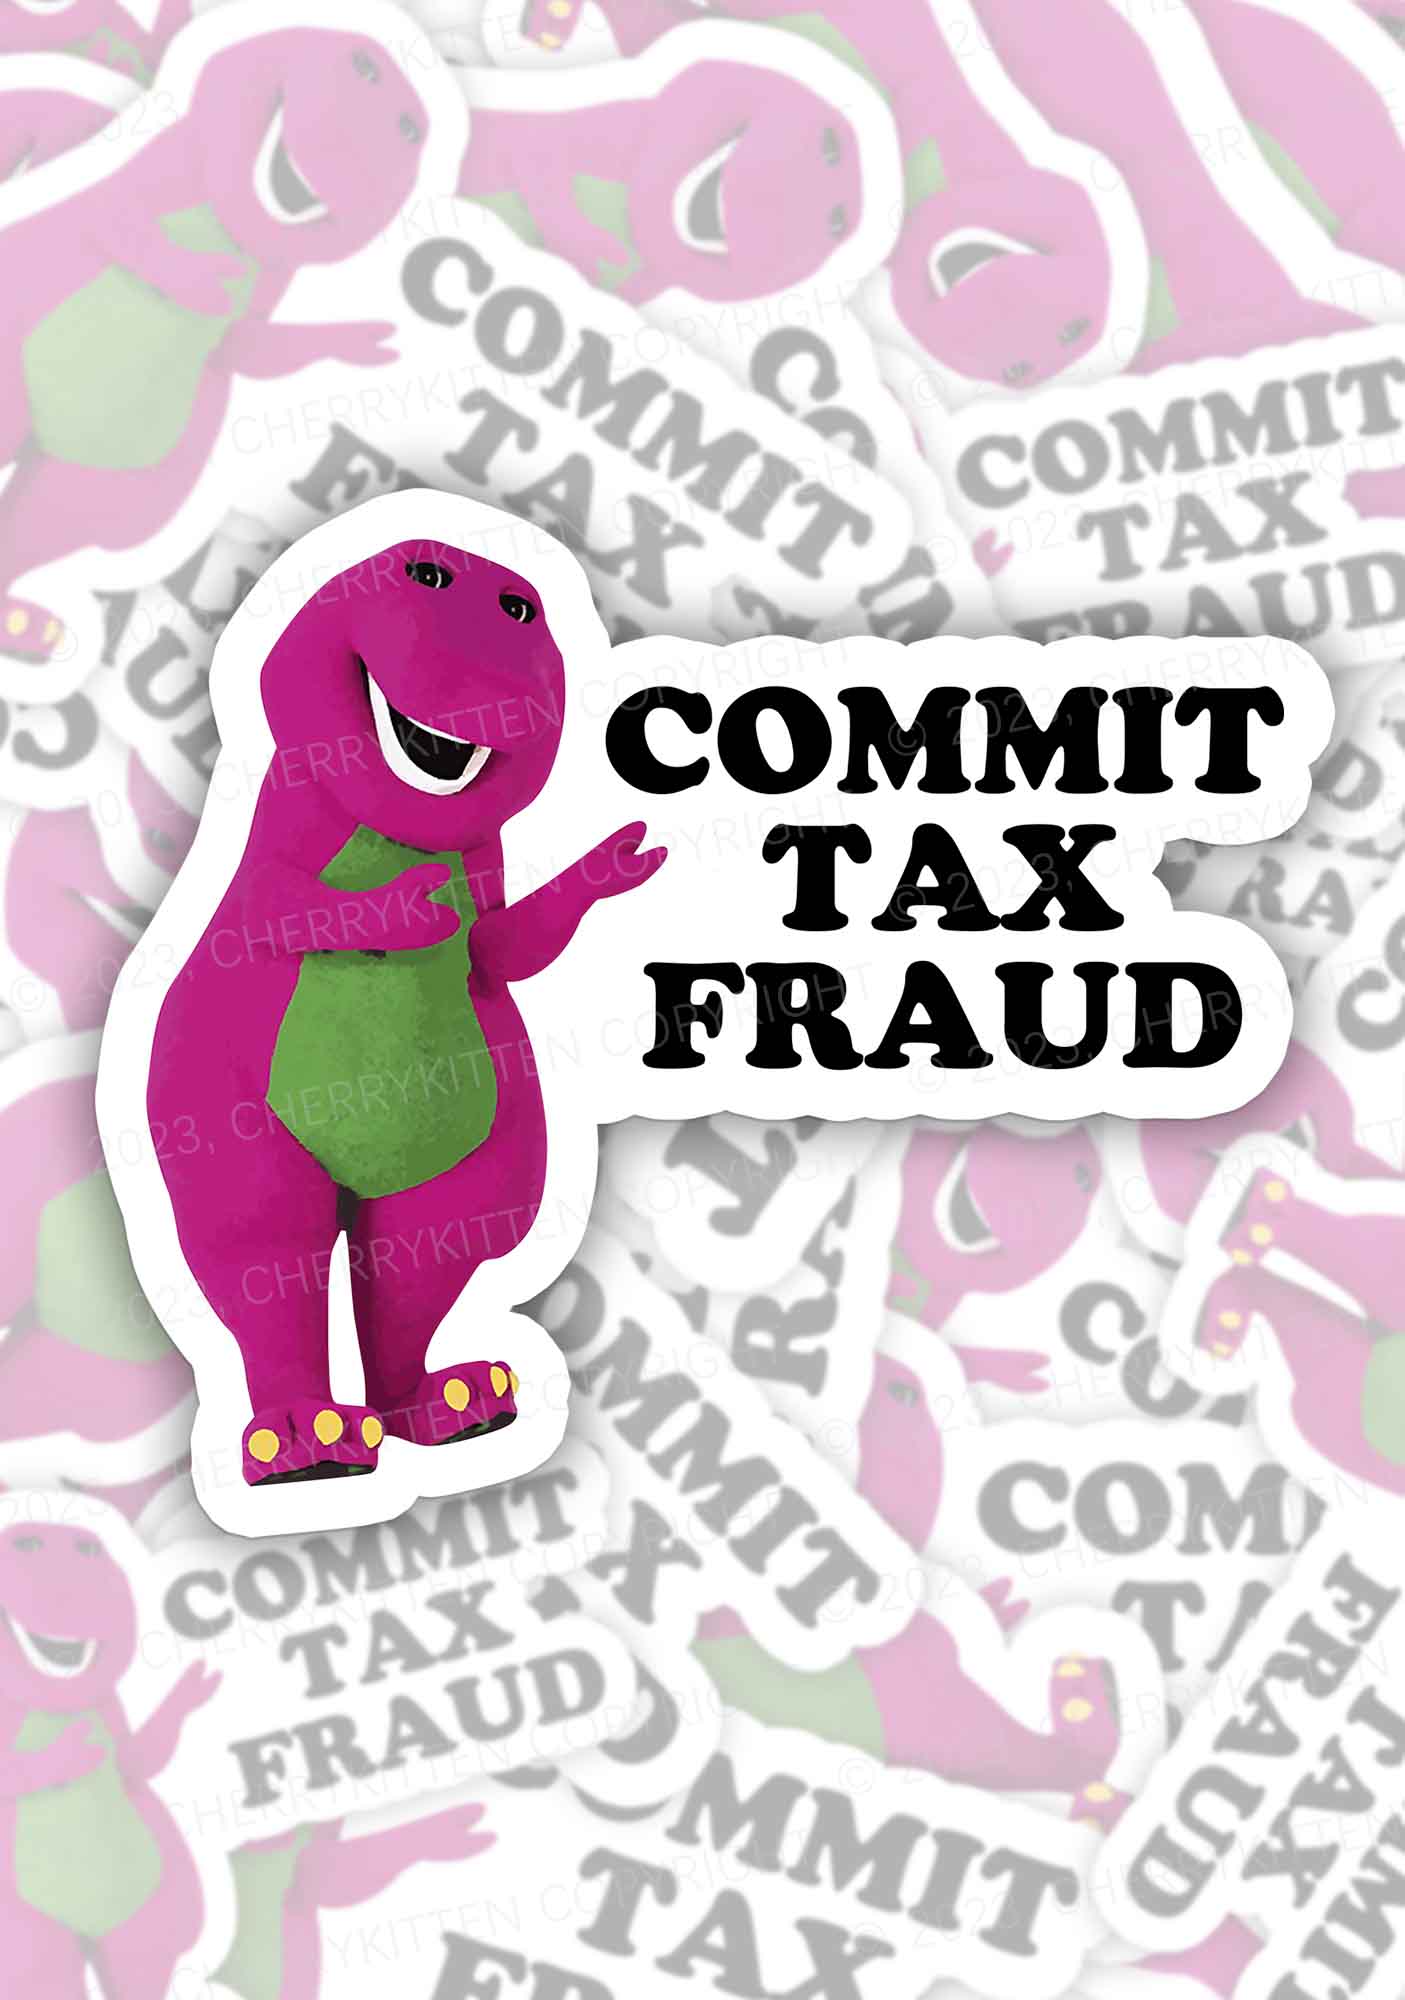 Commit Tax Fraud 1Pc Y2K Sticker Cherrykitten